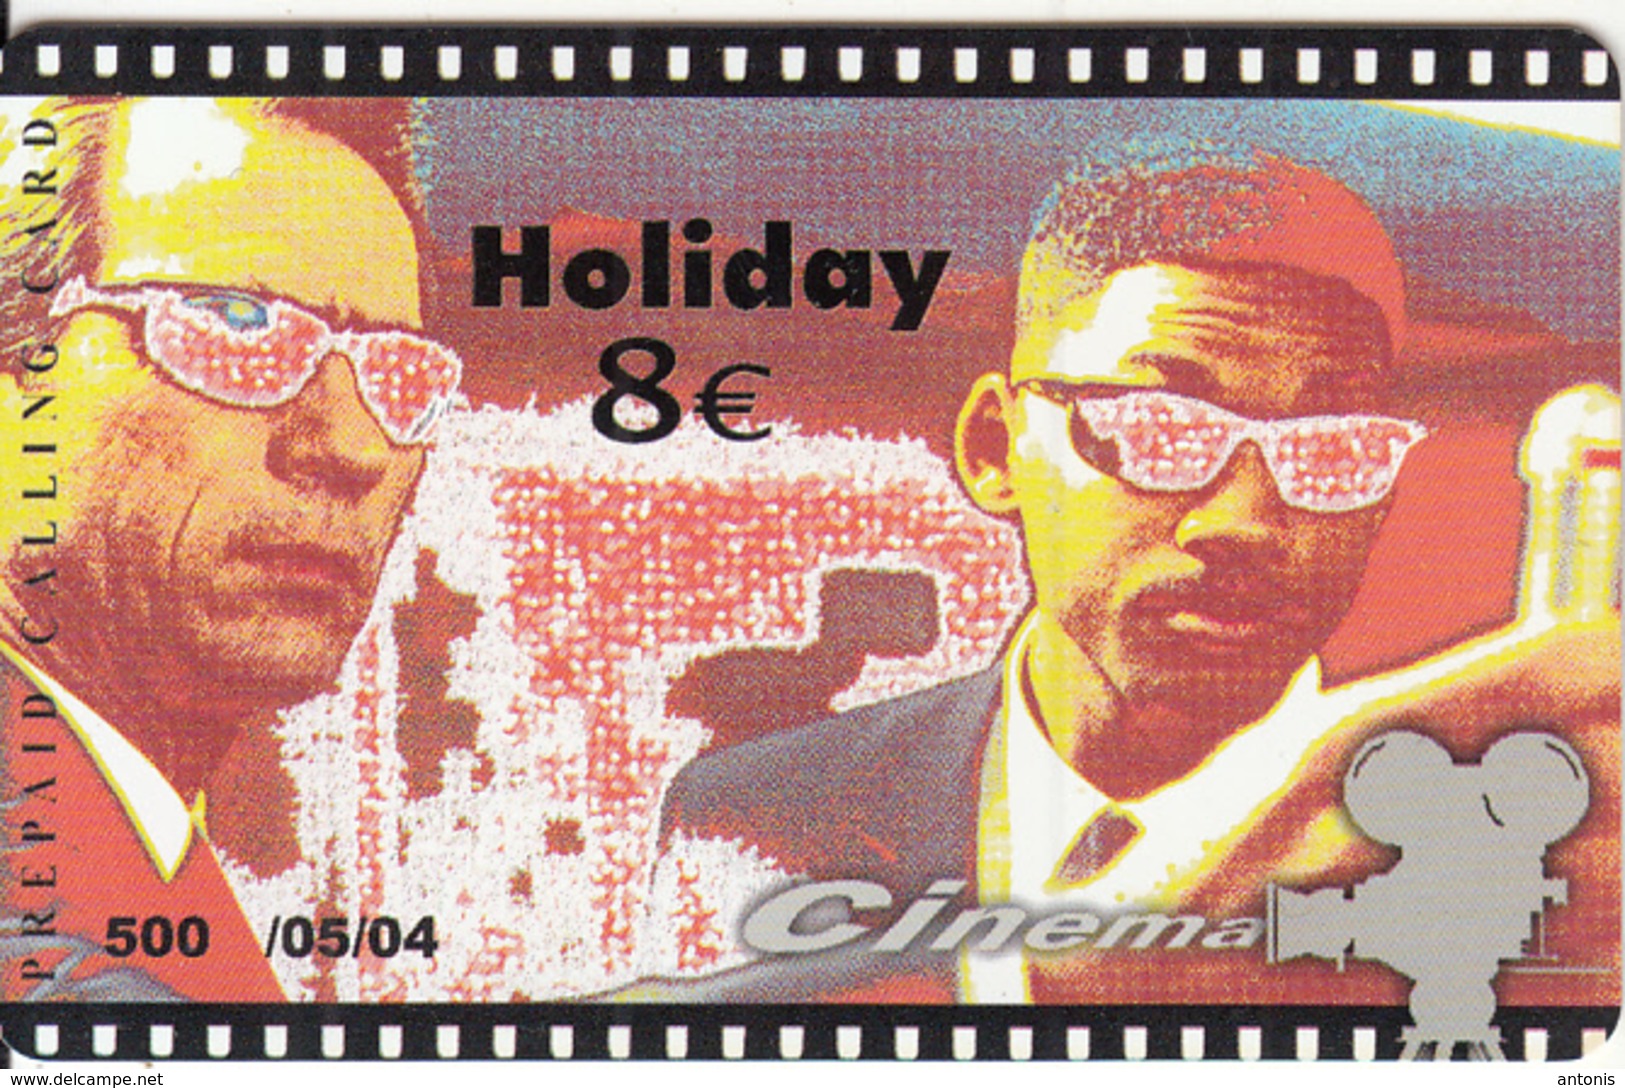 GREECE - Cinema, Men In Black/Tommy Lee Jones-Will Smith, Amimex Prepaid Card 8 Euro, Tirage 500, 05/04, Used - Cinema